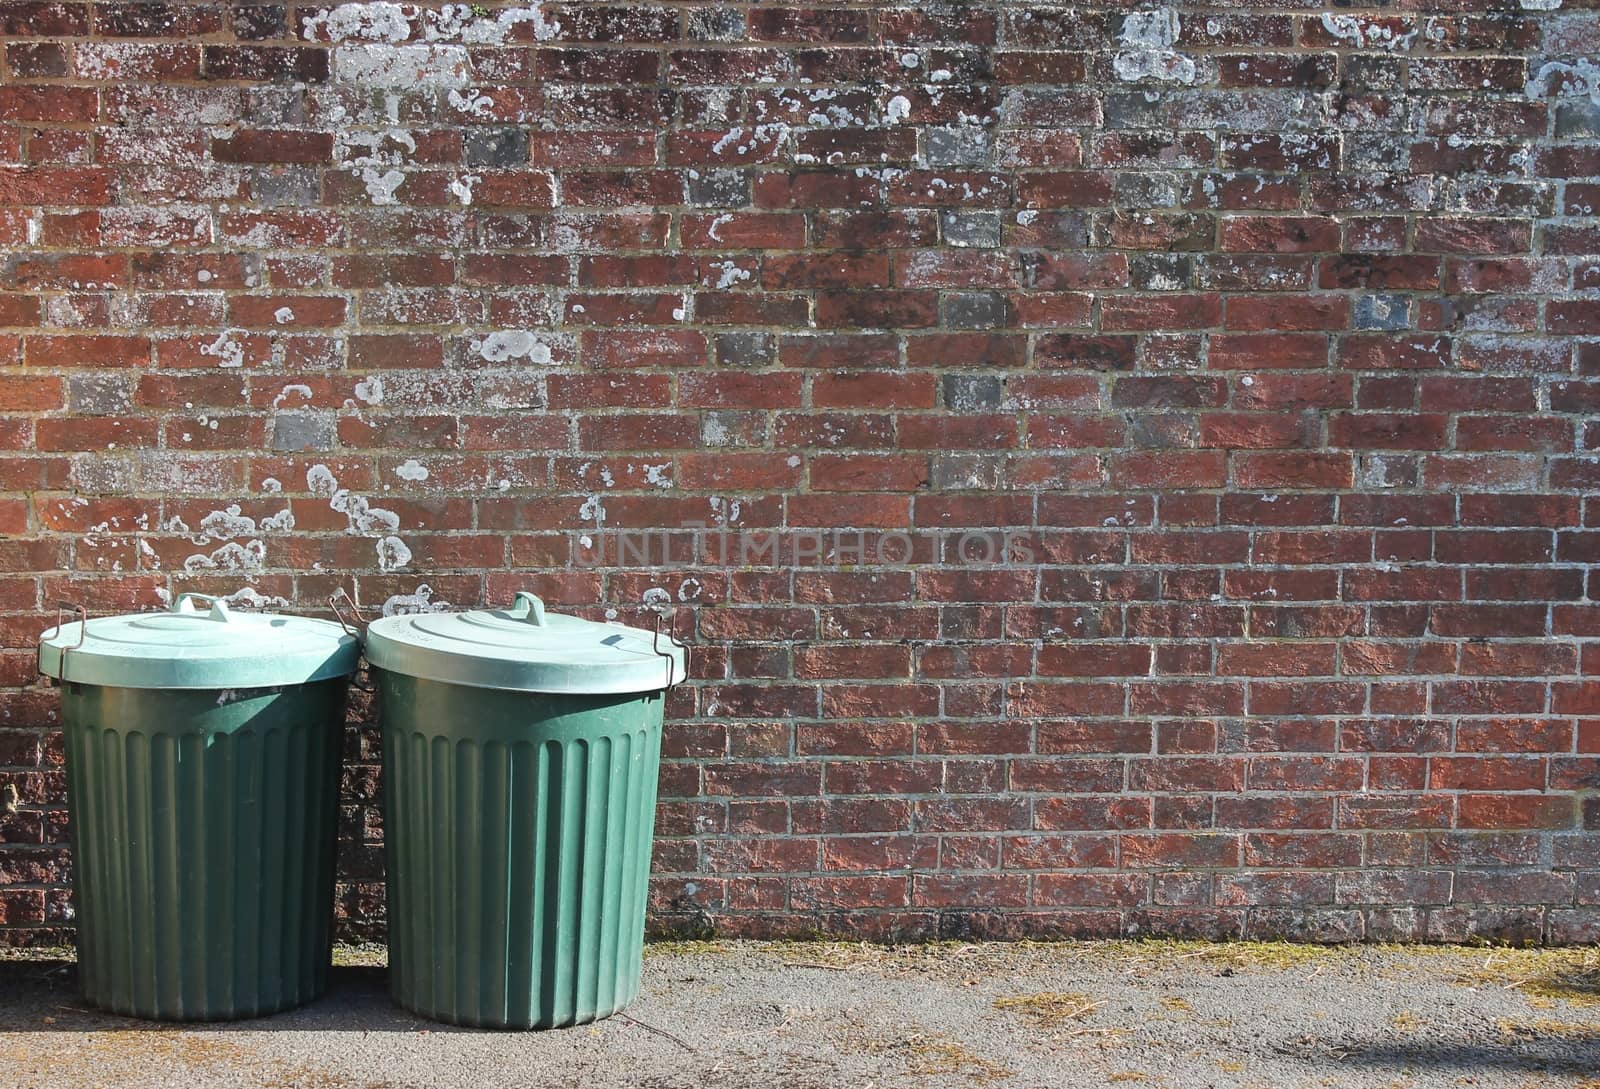 trash can dustbins outside against brick wall by cheekylorns